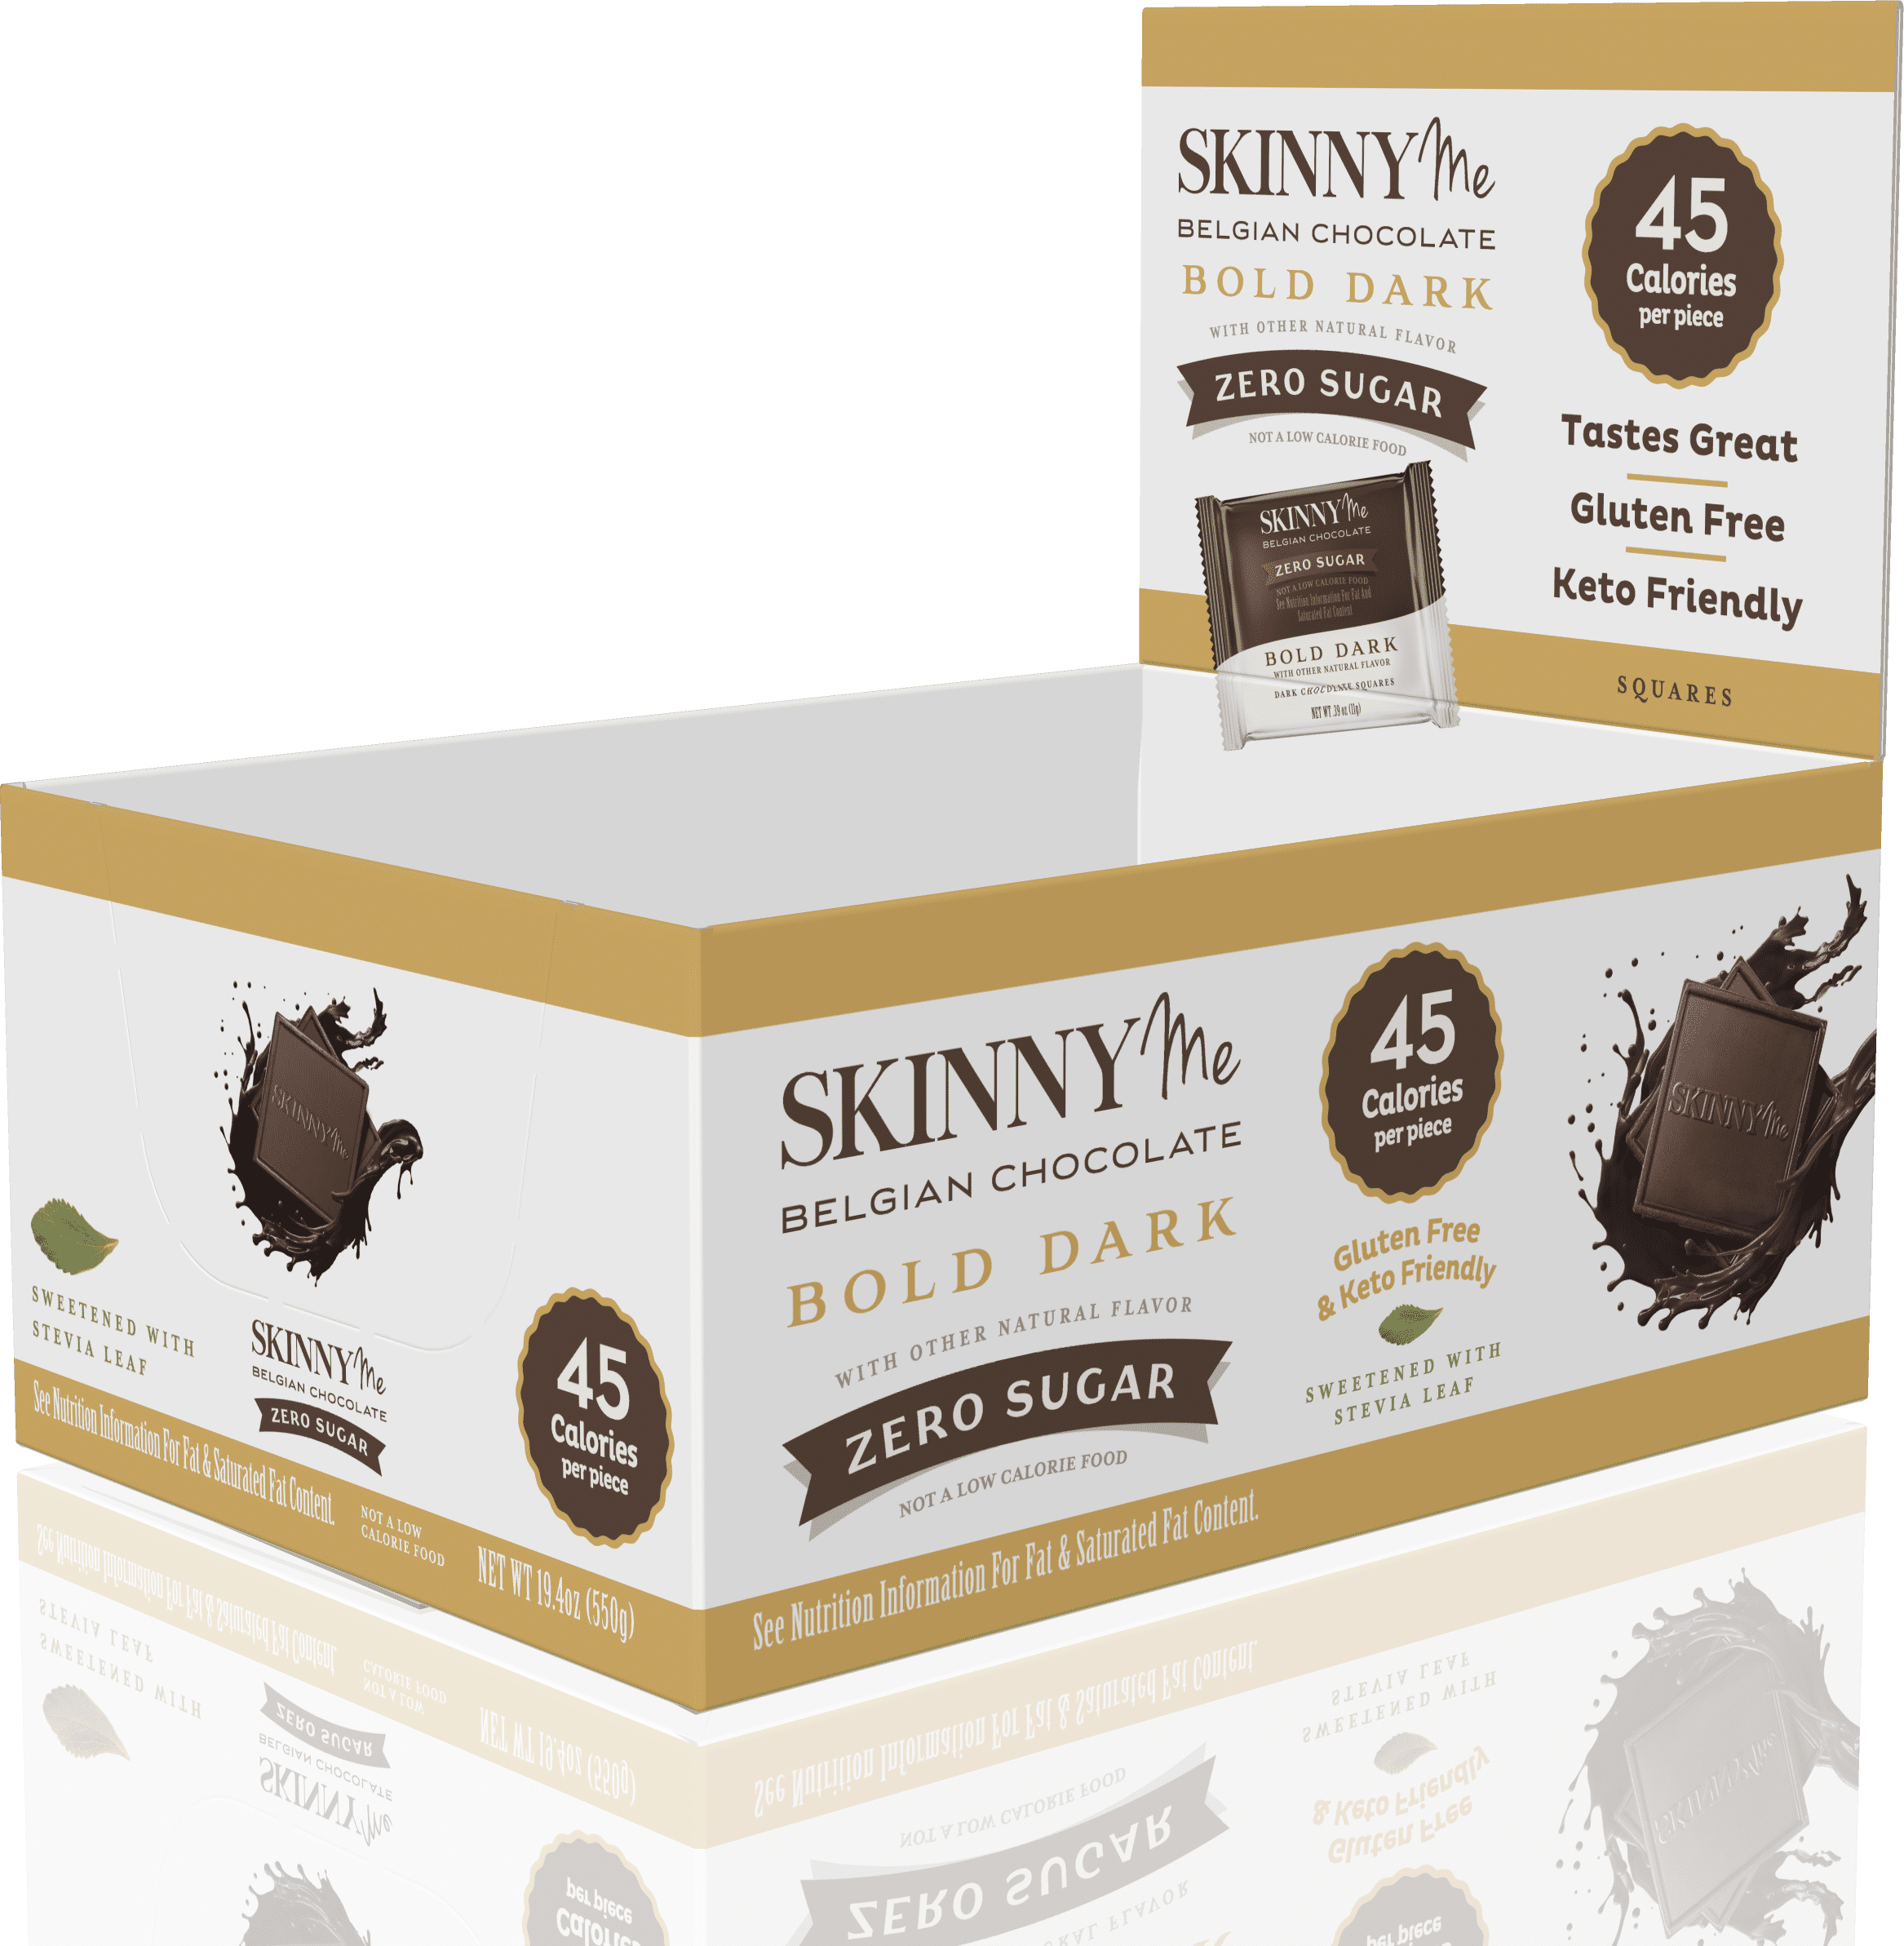 SkinnyMe Bold Dark Square - 50ct 4 innerpacks per case 0.4 oz